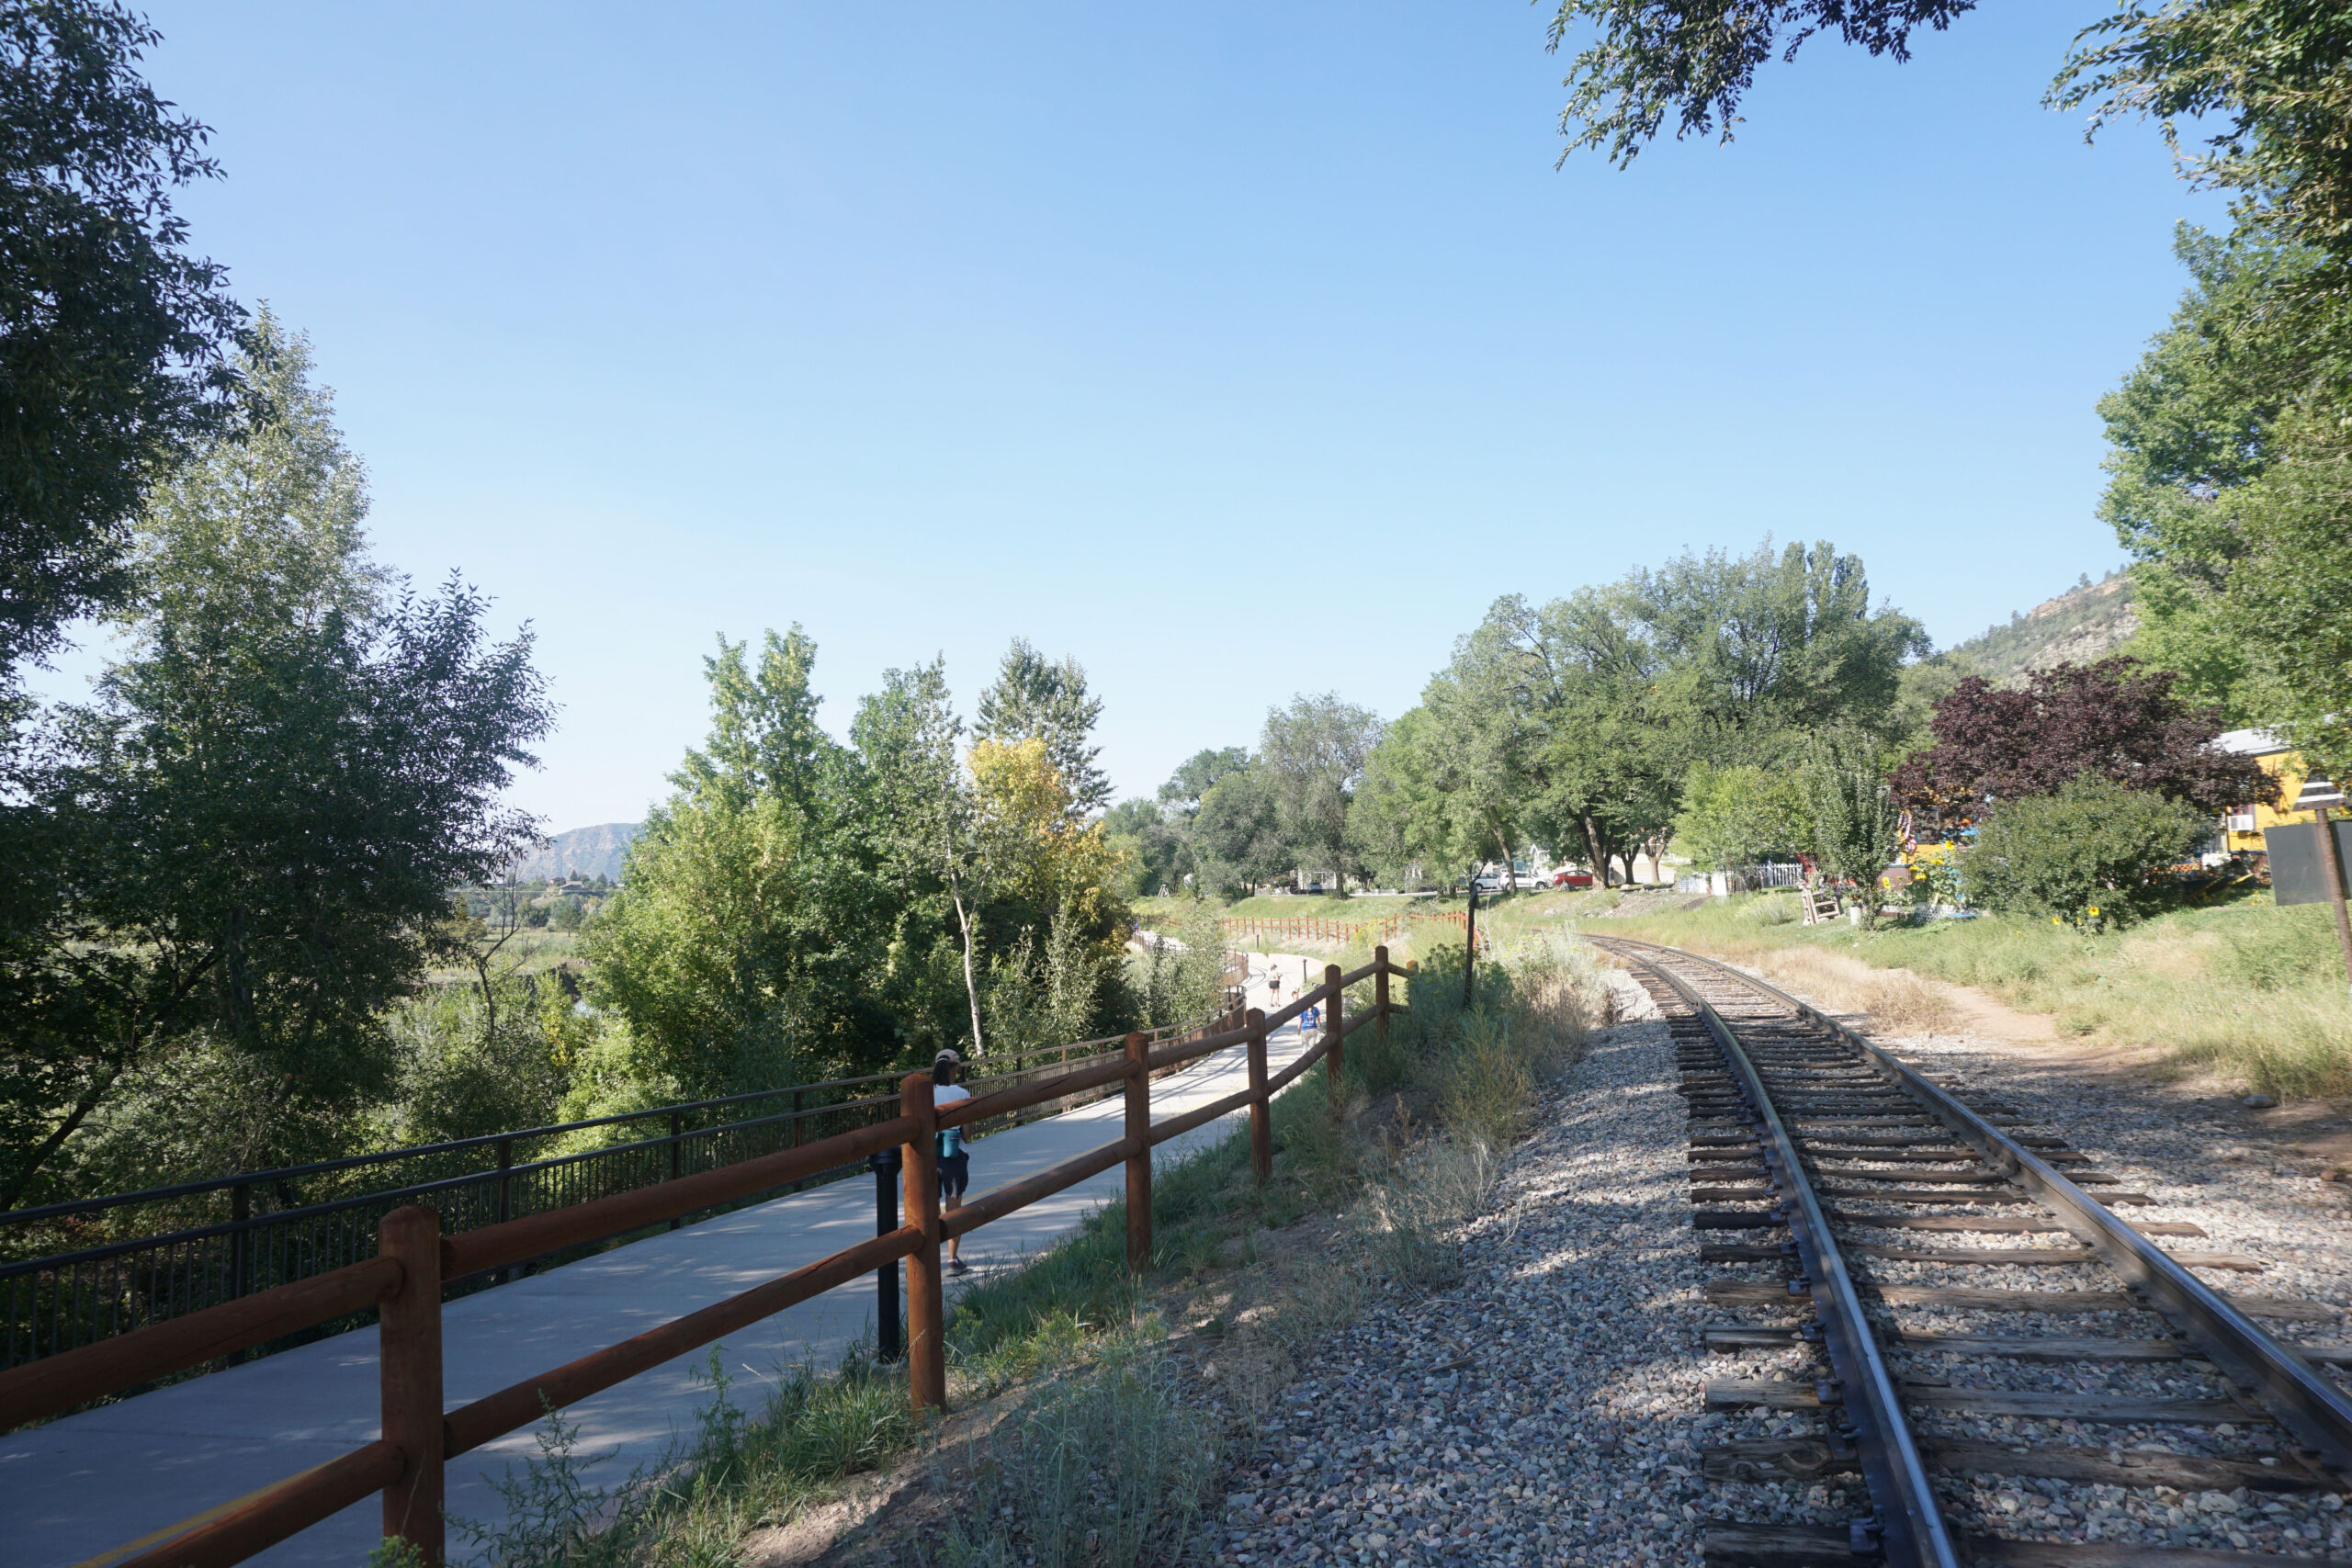 Animas River Trail and train tracks